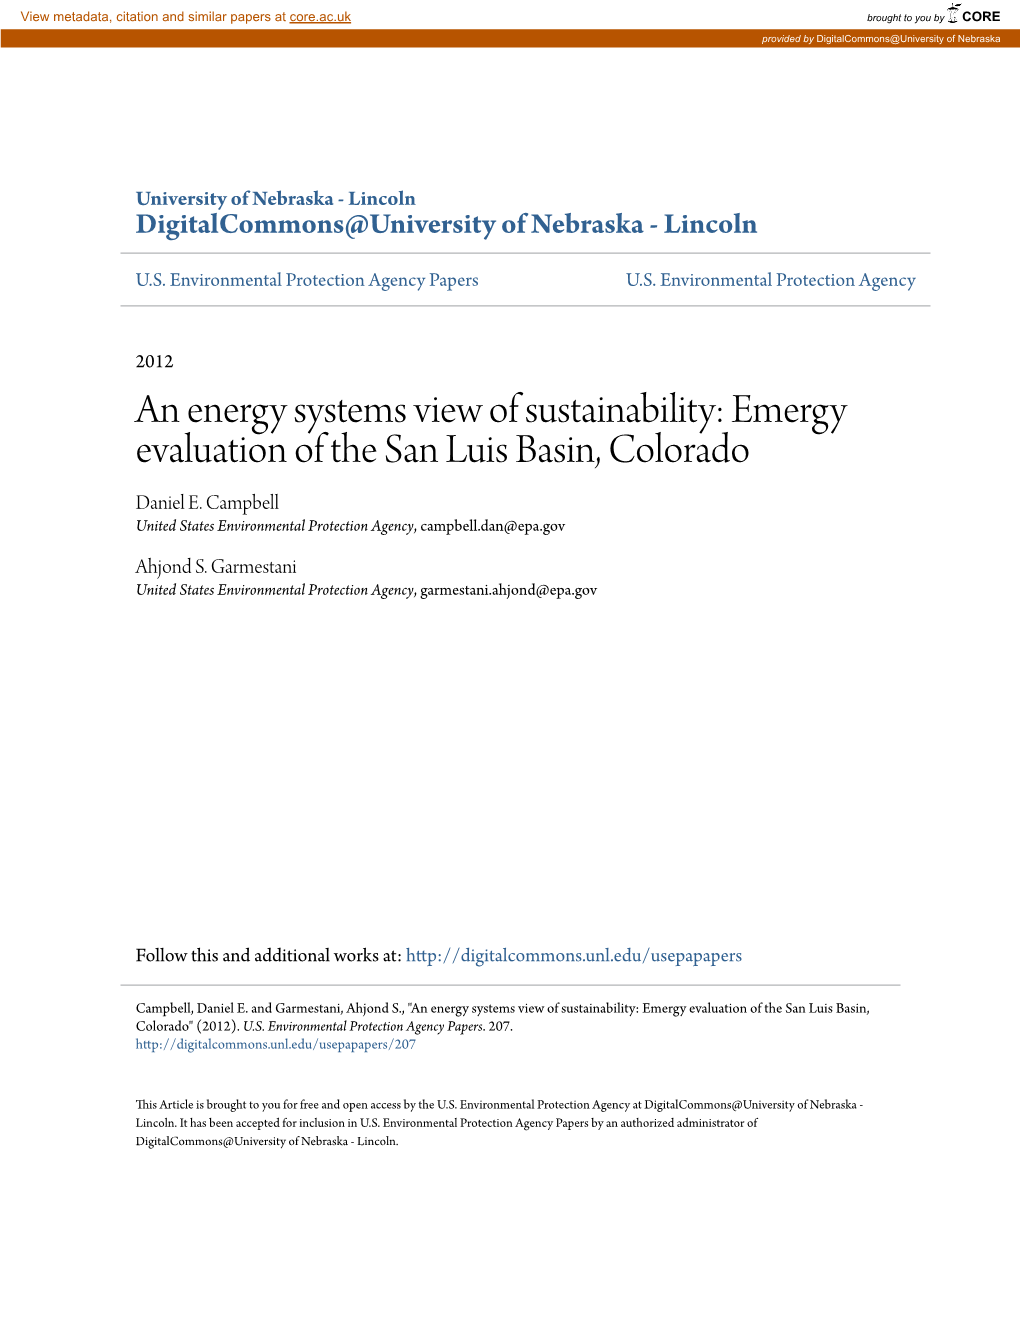 Emergy Evaluation of the San Luis Basin, Colorado Daniel E